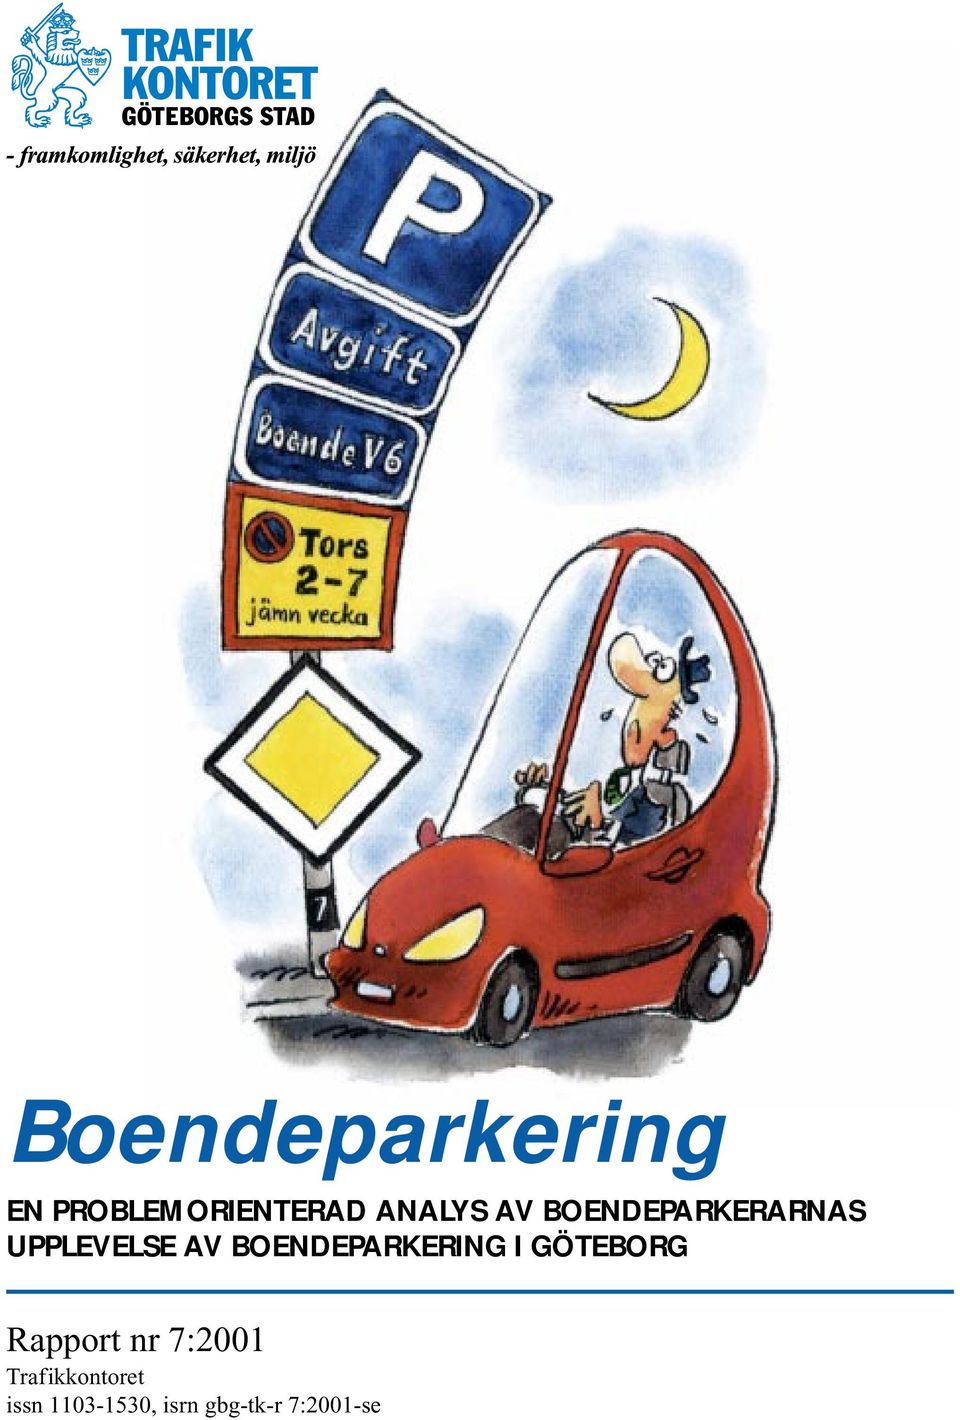 Boendeparkering EN PROBLEMORIENTERAD ANALYS AV BOENDEPARKERARNAS UPPLEVELSE  AV BOENDEPARKERING I GÖTEBORG - PDF Free Download